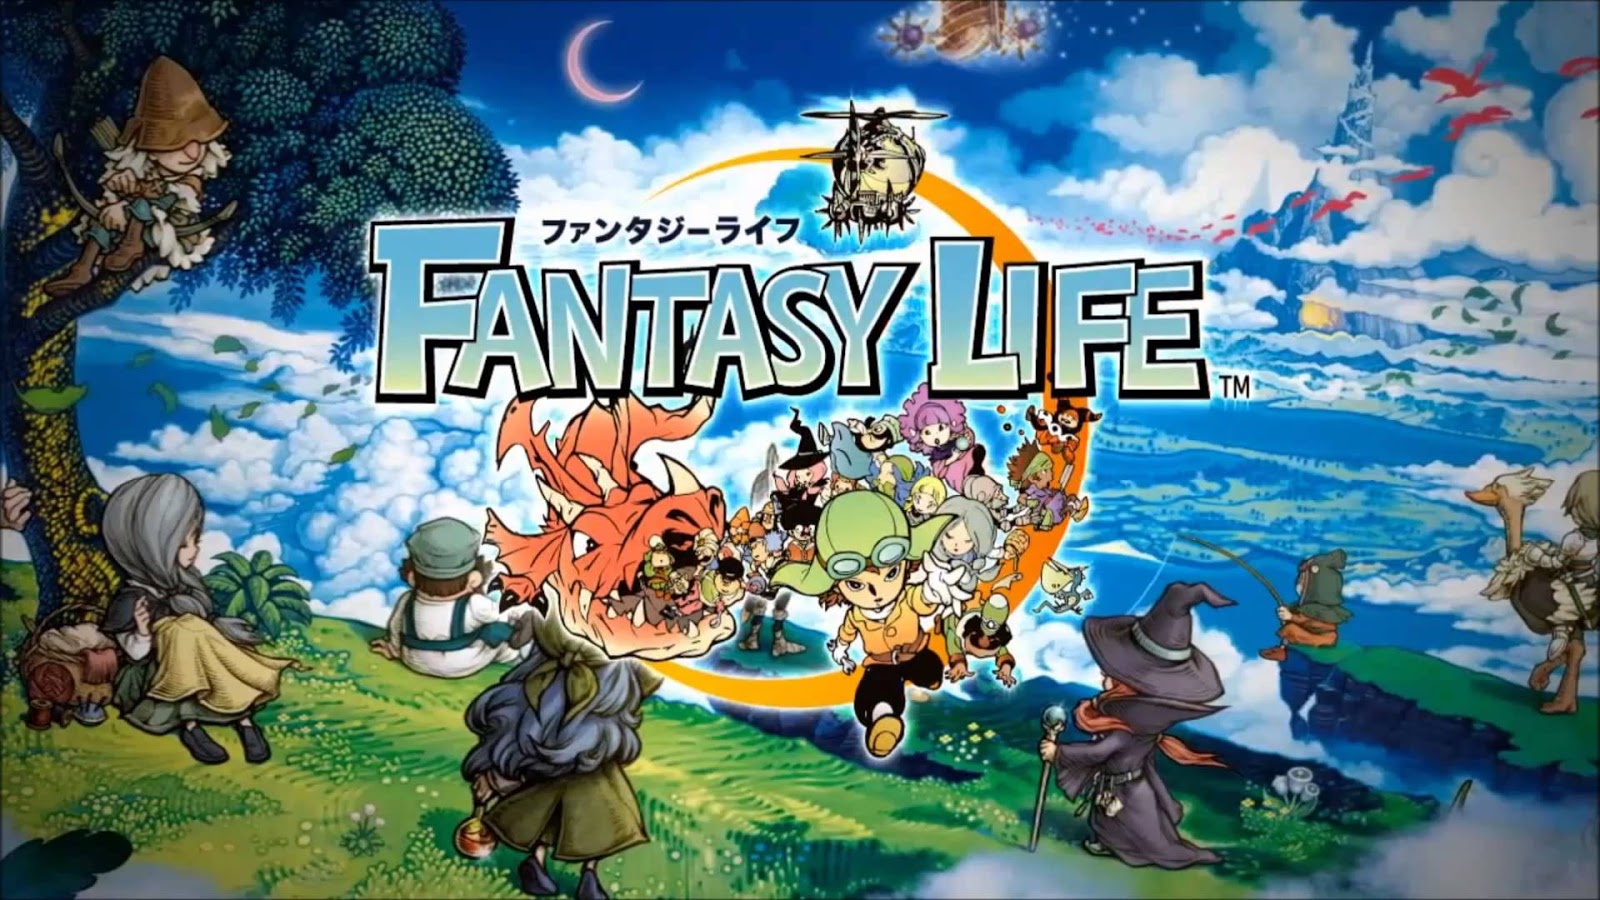 Life is fantasy. Life Fantasy игра. Fantasy Life 3ds. Fantasy Life Nintendo. Fantasy Life Origin Island.